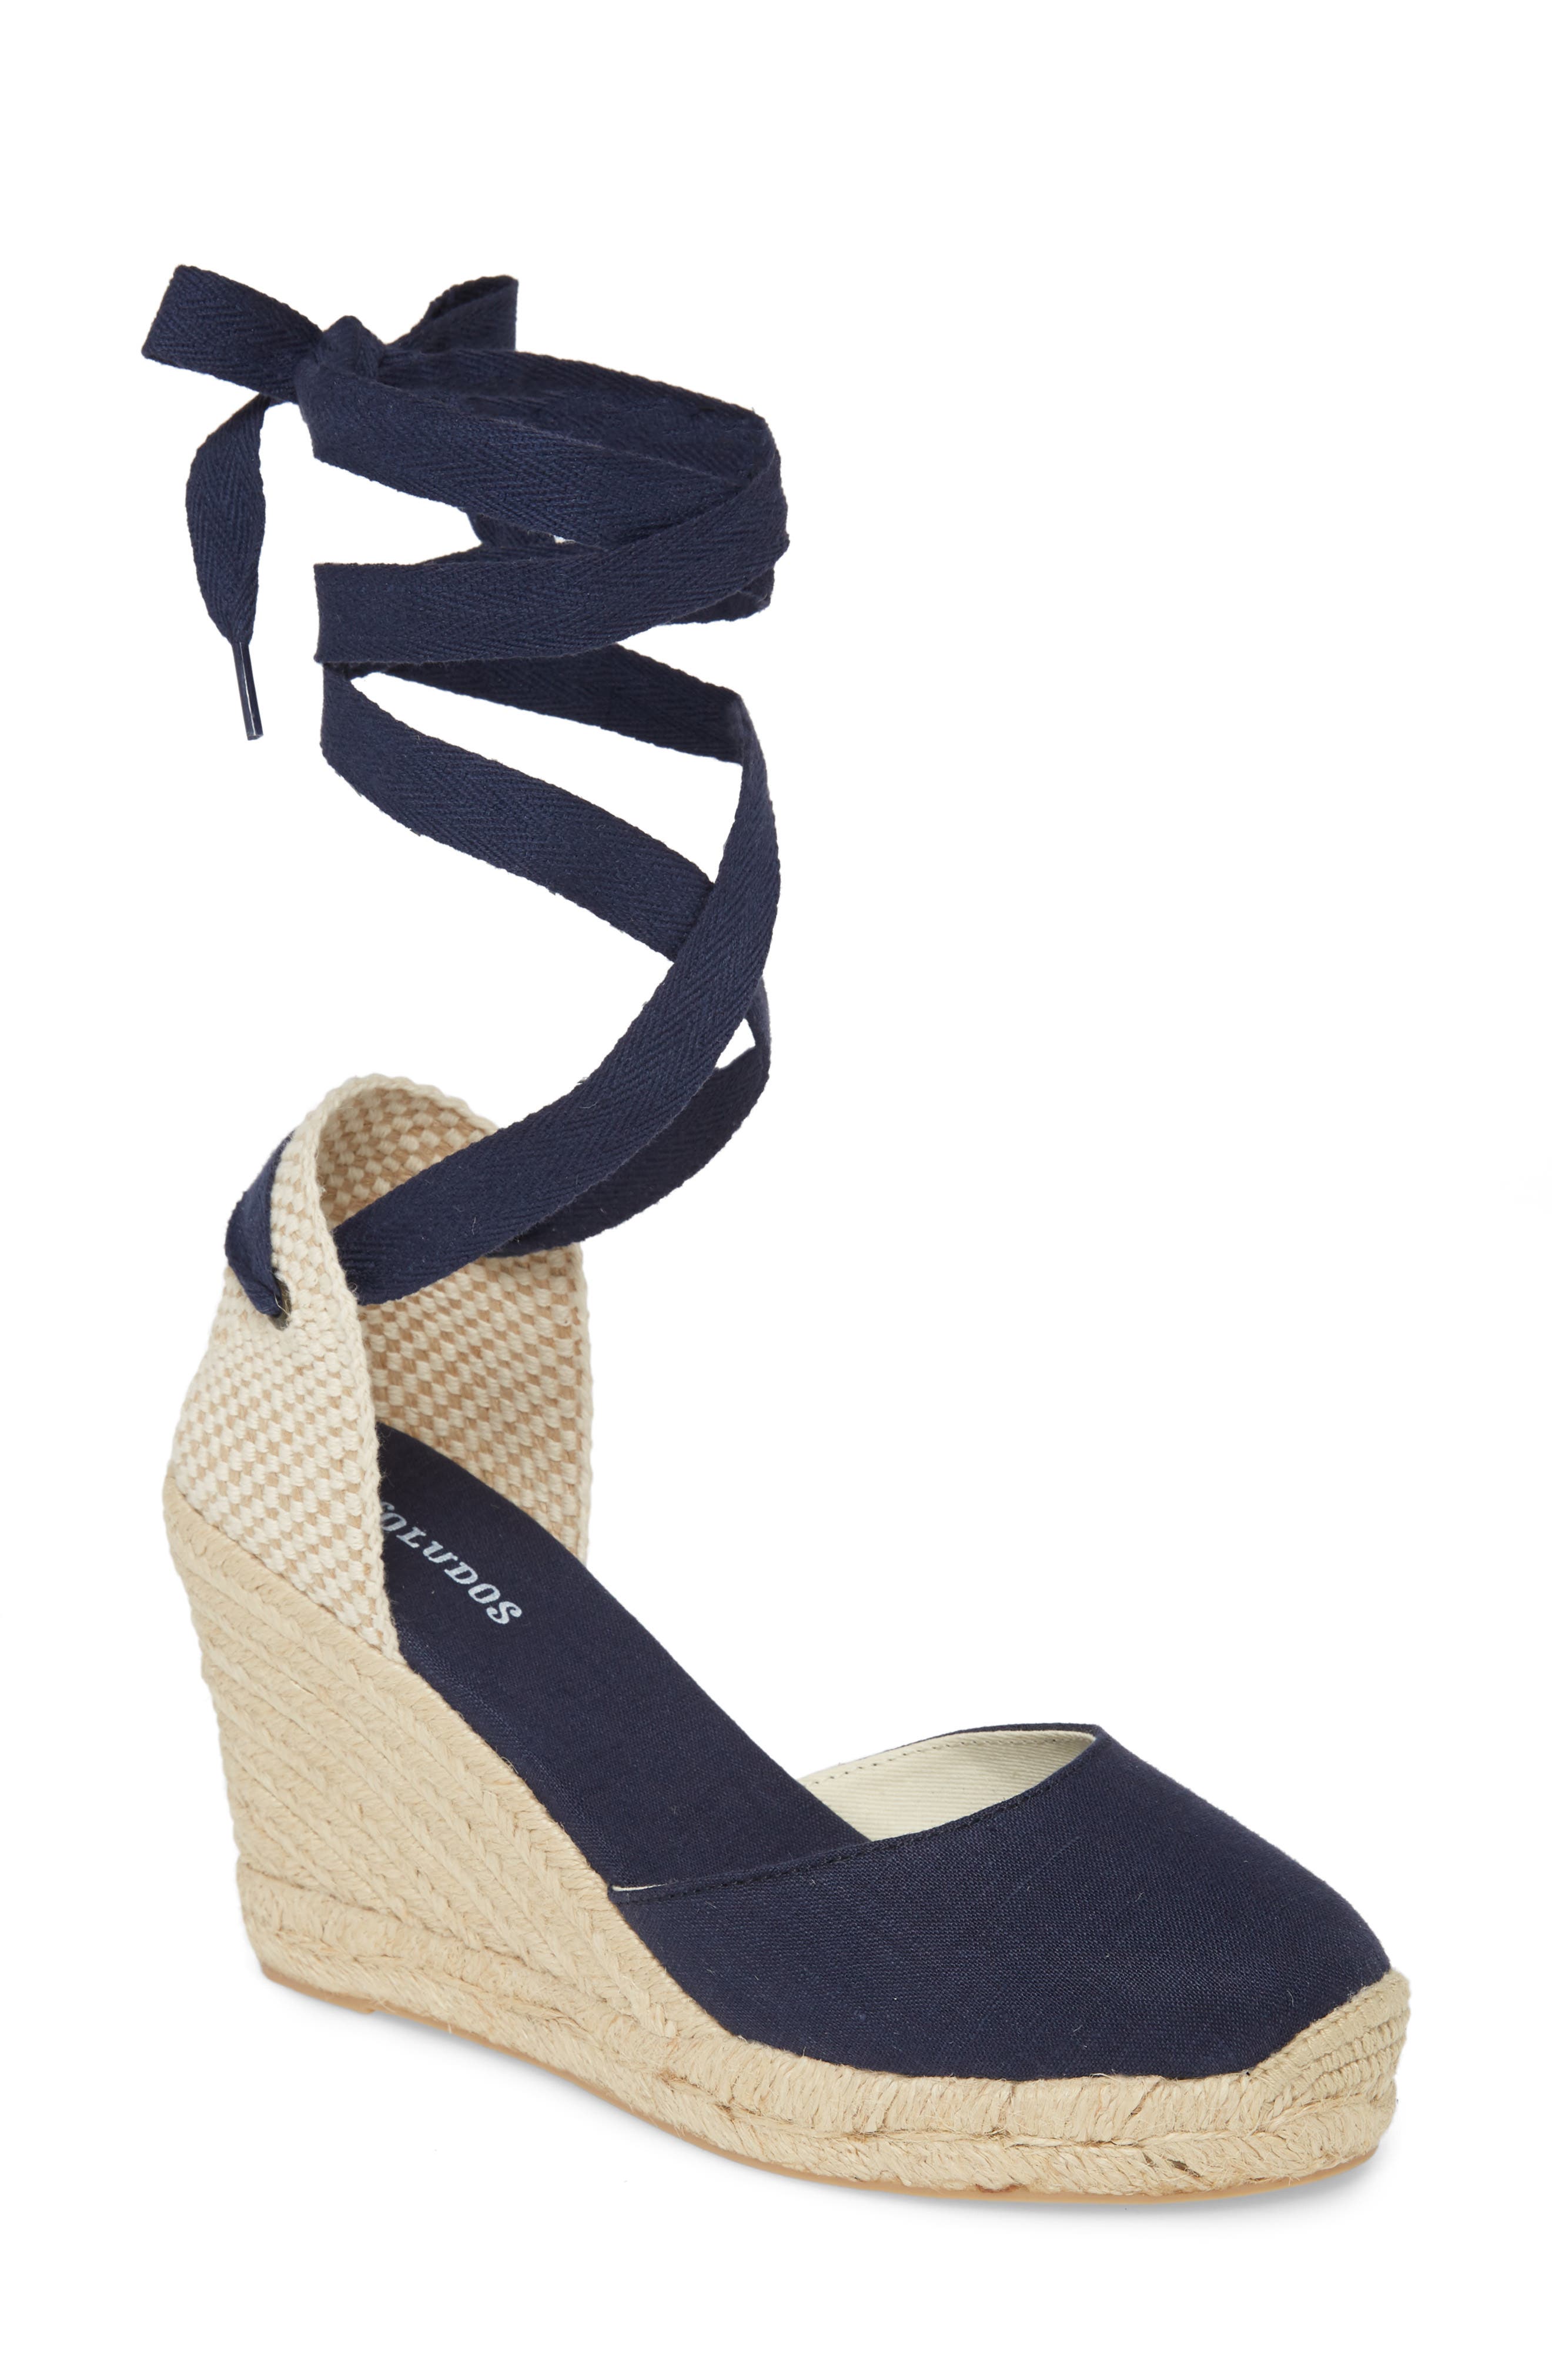 Caldes Linen Wedge Sandal in Navy Linen at Nordstrom Nordstrom Women Shoes High Heels Wedges Wedge Sandals 